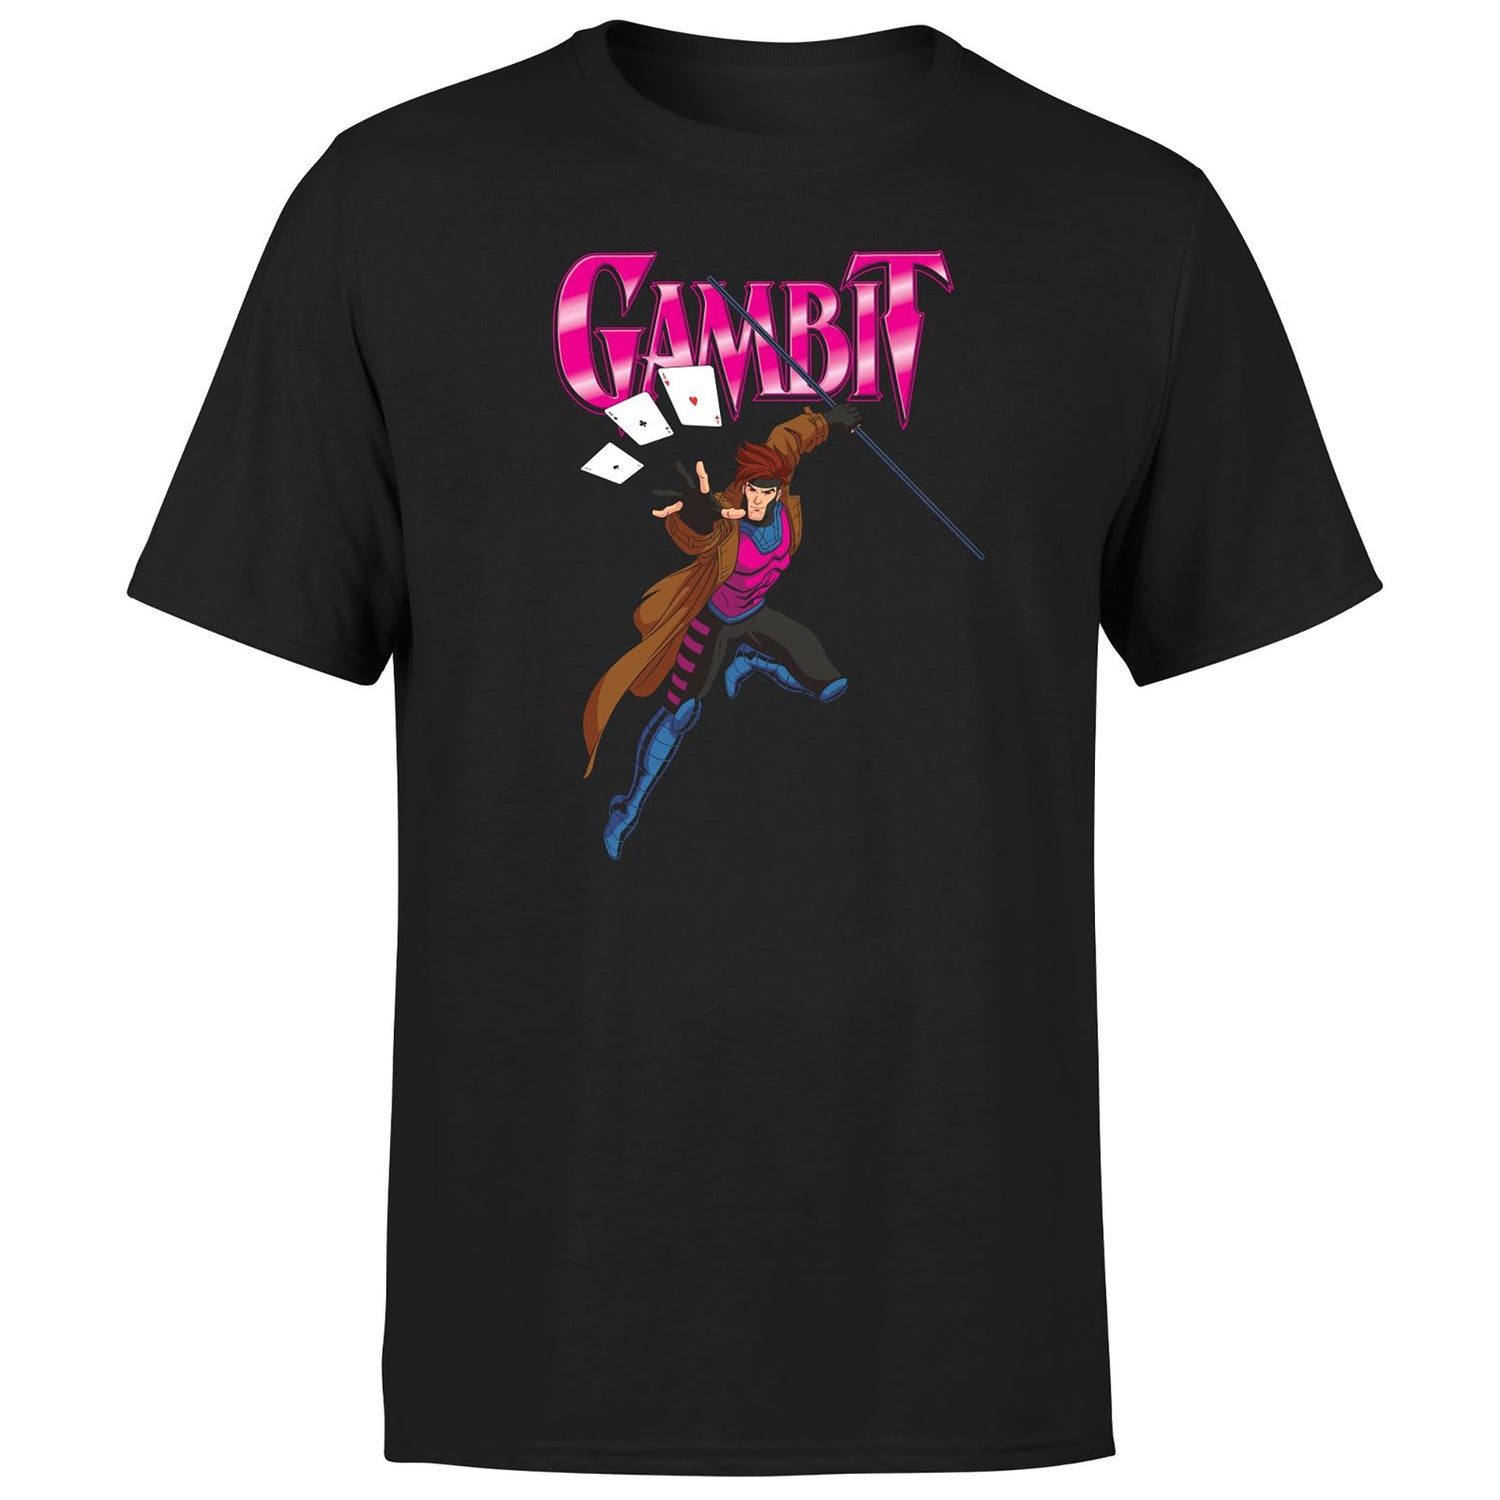 X-Men '97 Gambit Unisex T-Shirt - Black